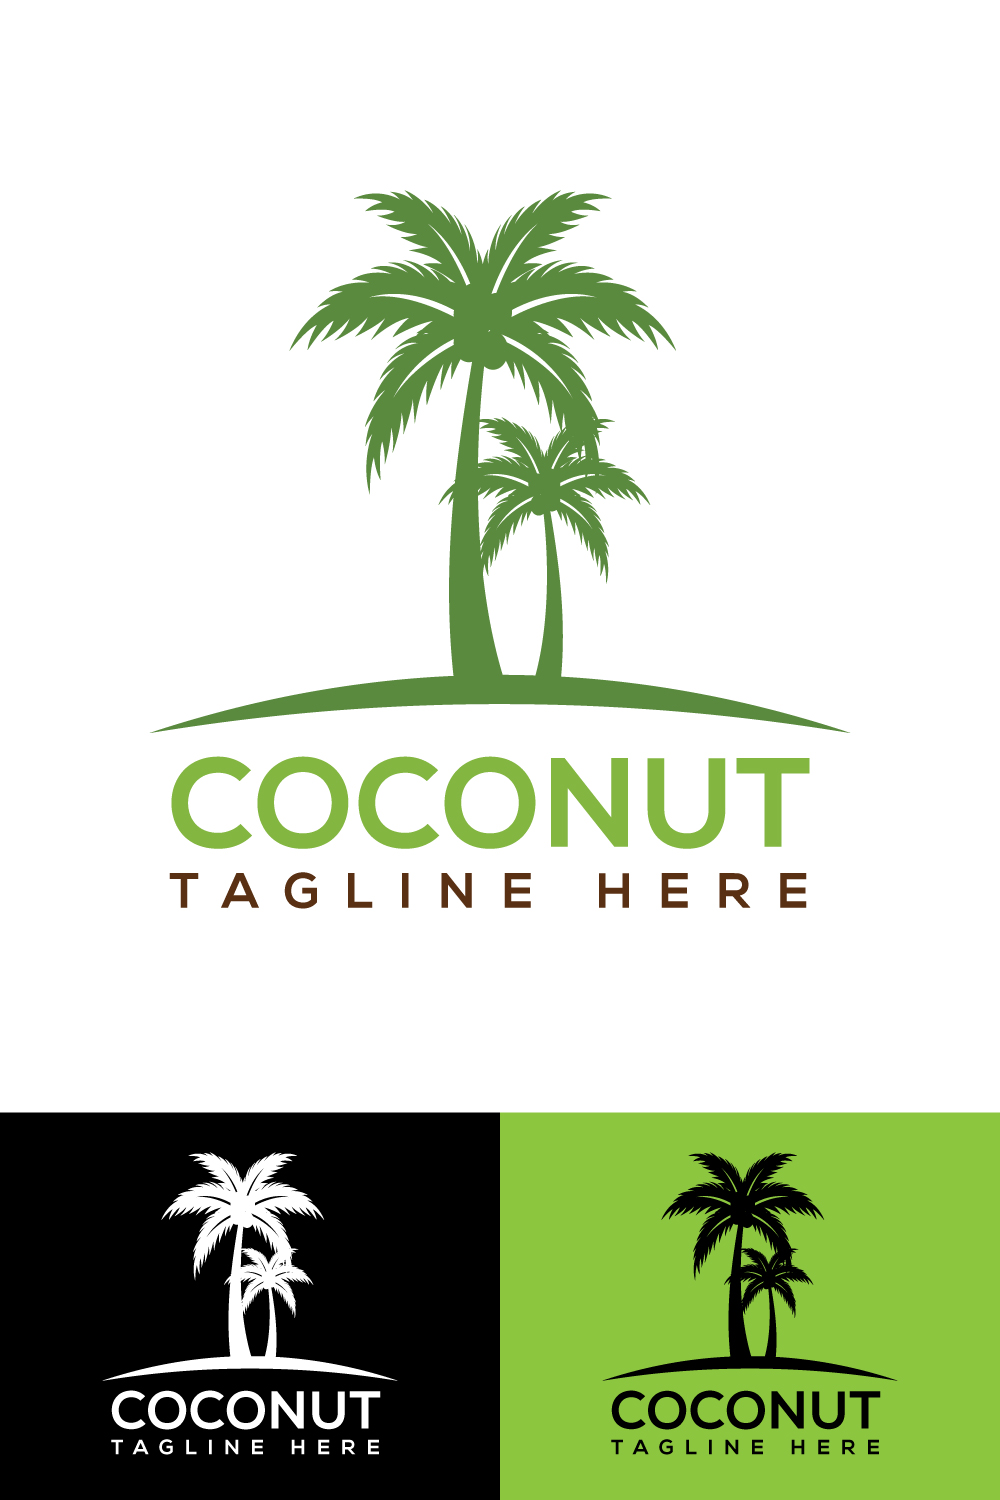 Coconut Tree Logo Design pinterest image.